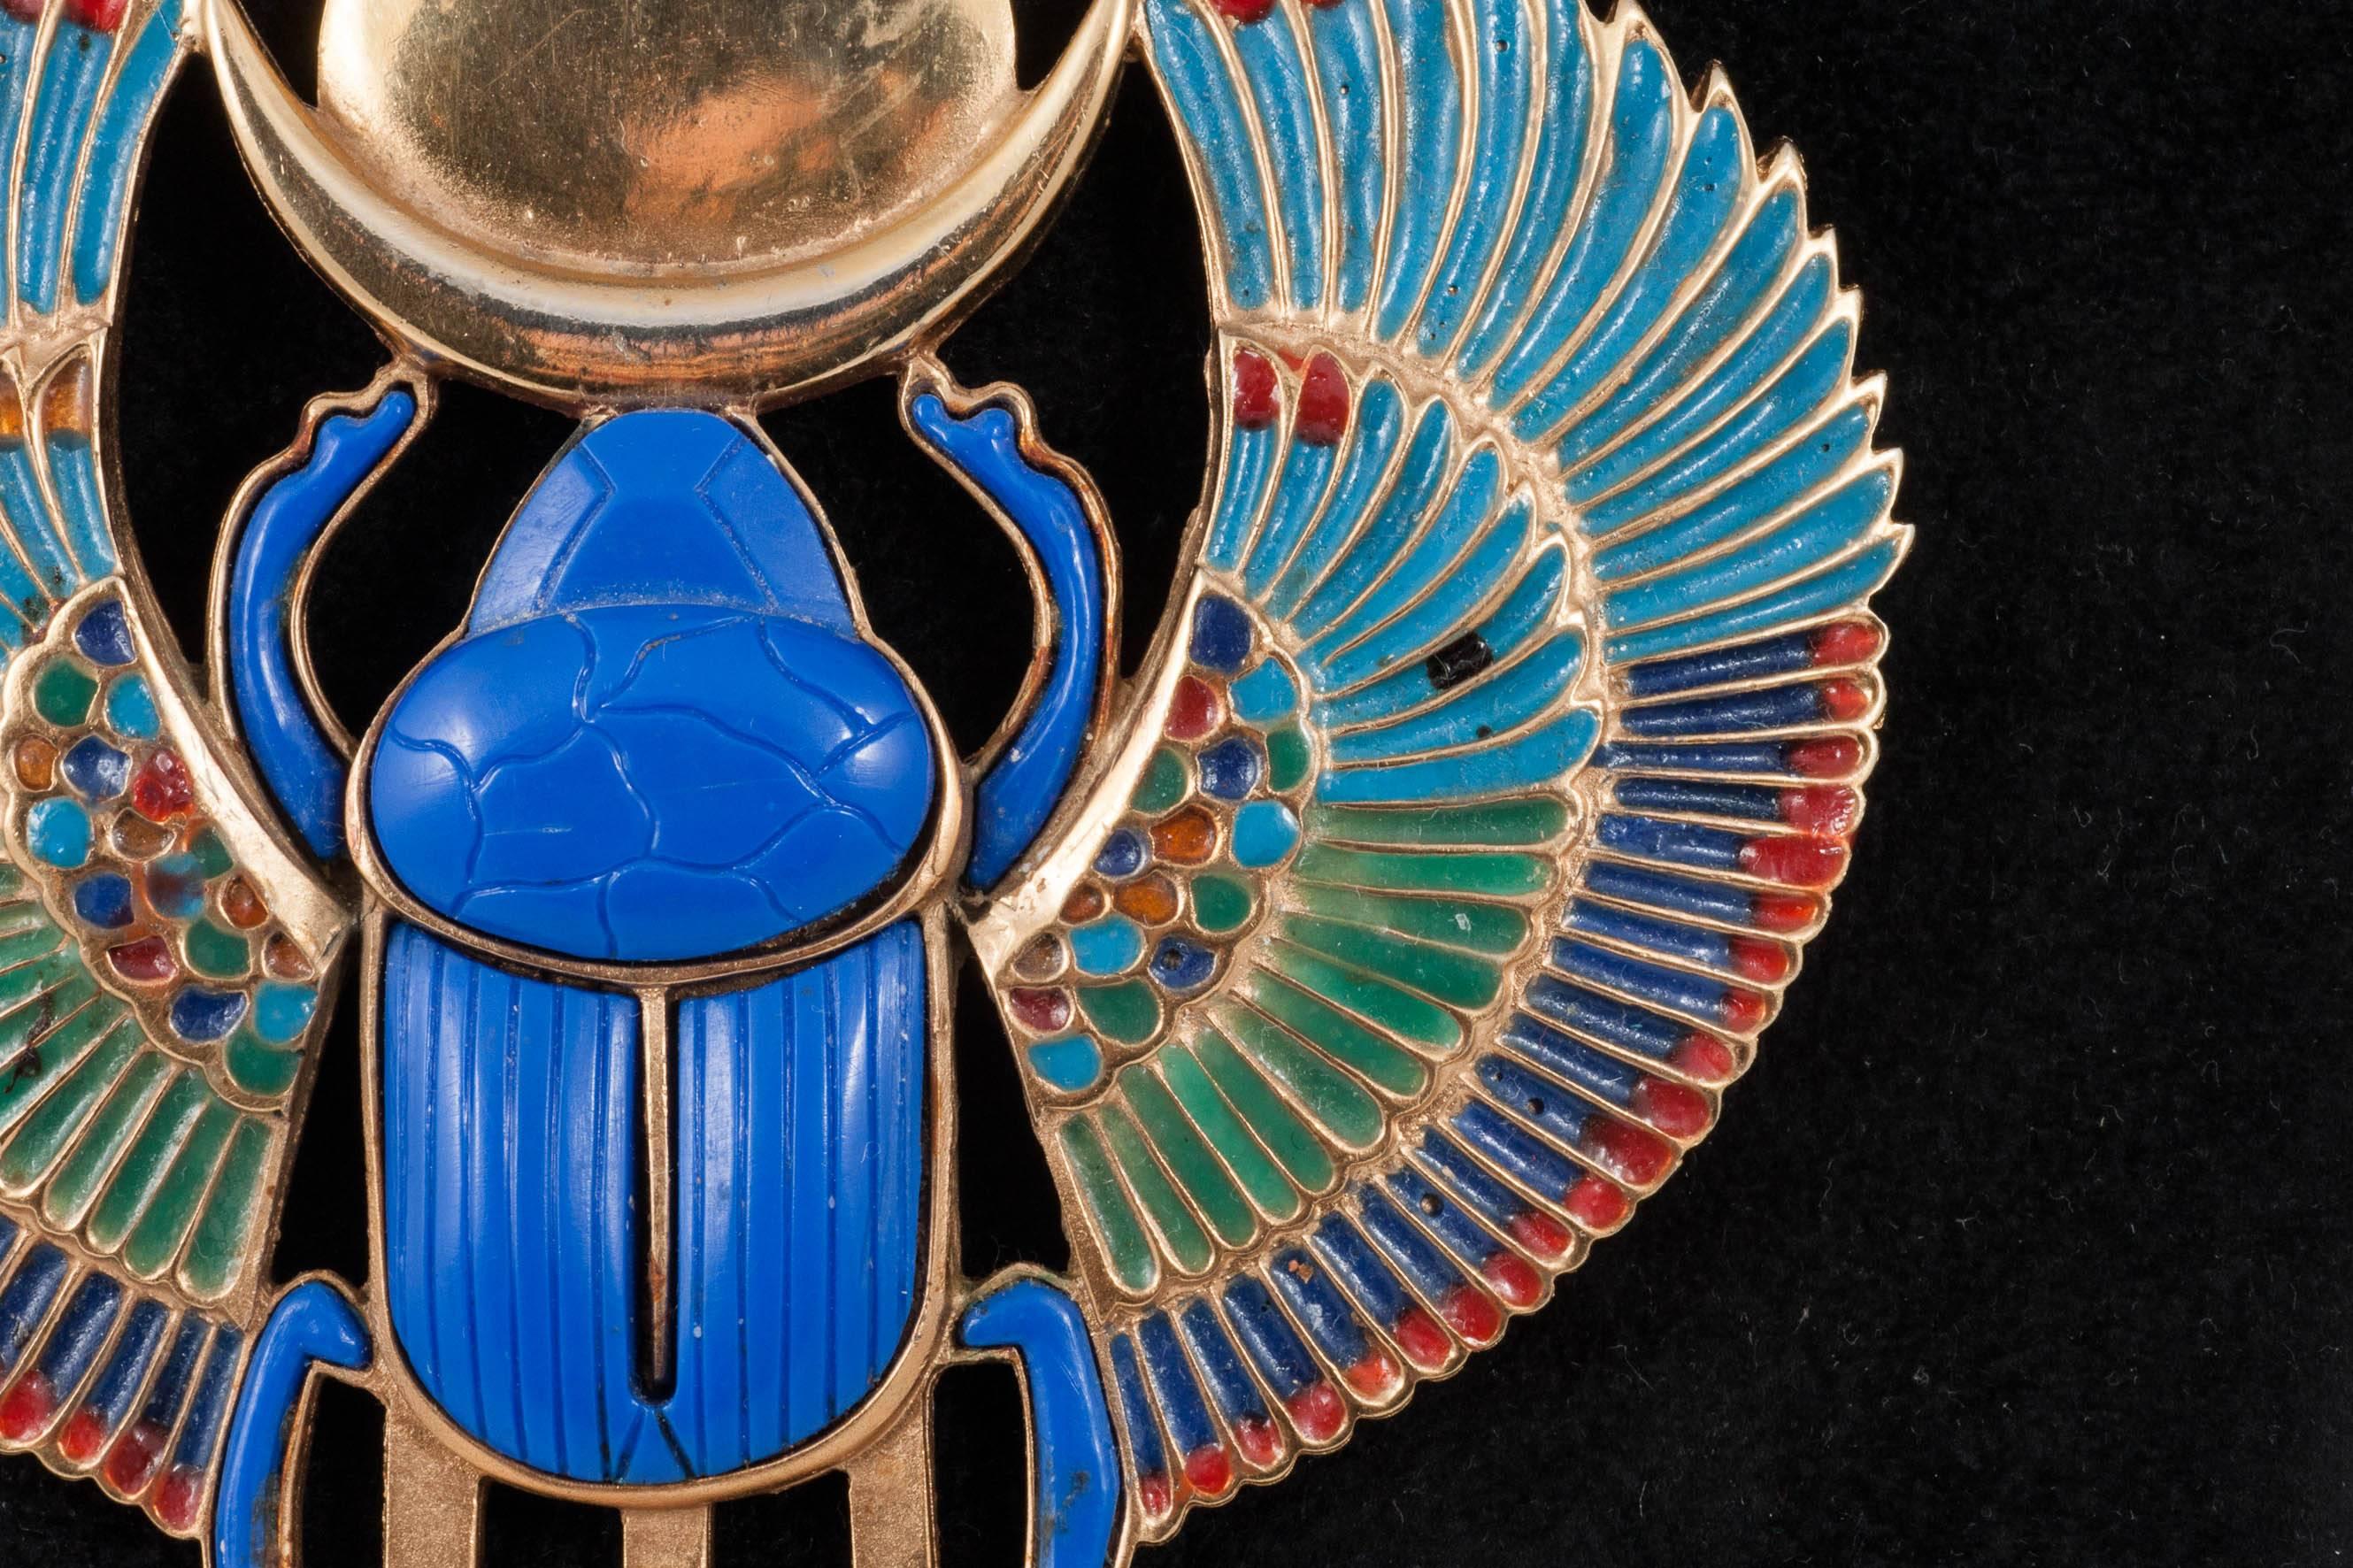 Egyptian Revival 'Tutankhamun' gilt, enamel and lucite pendant by Thomas Fattorini, 1972